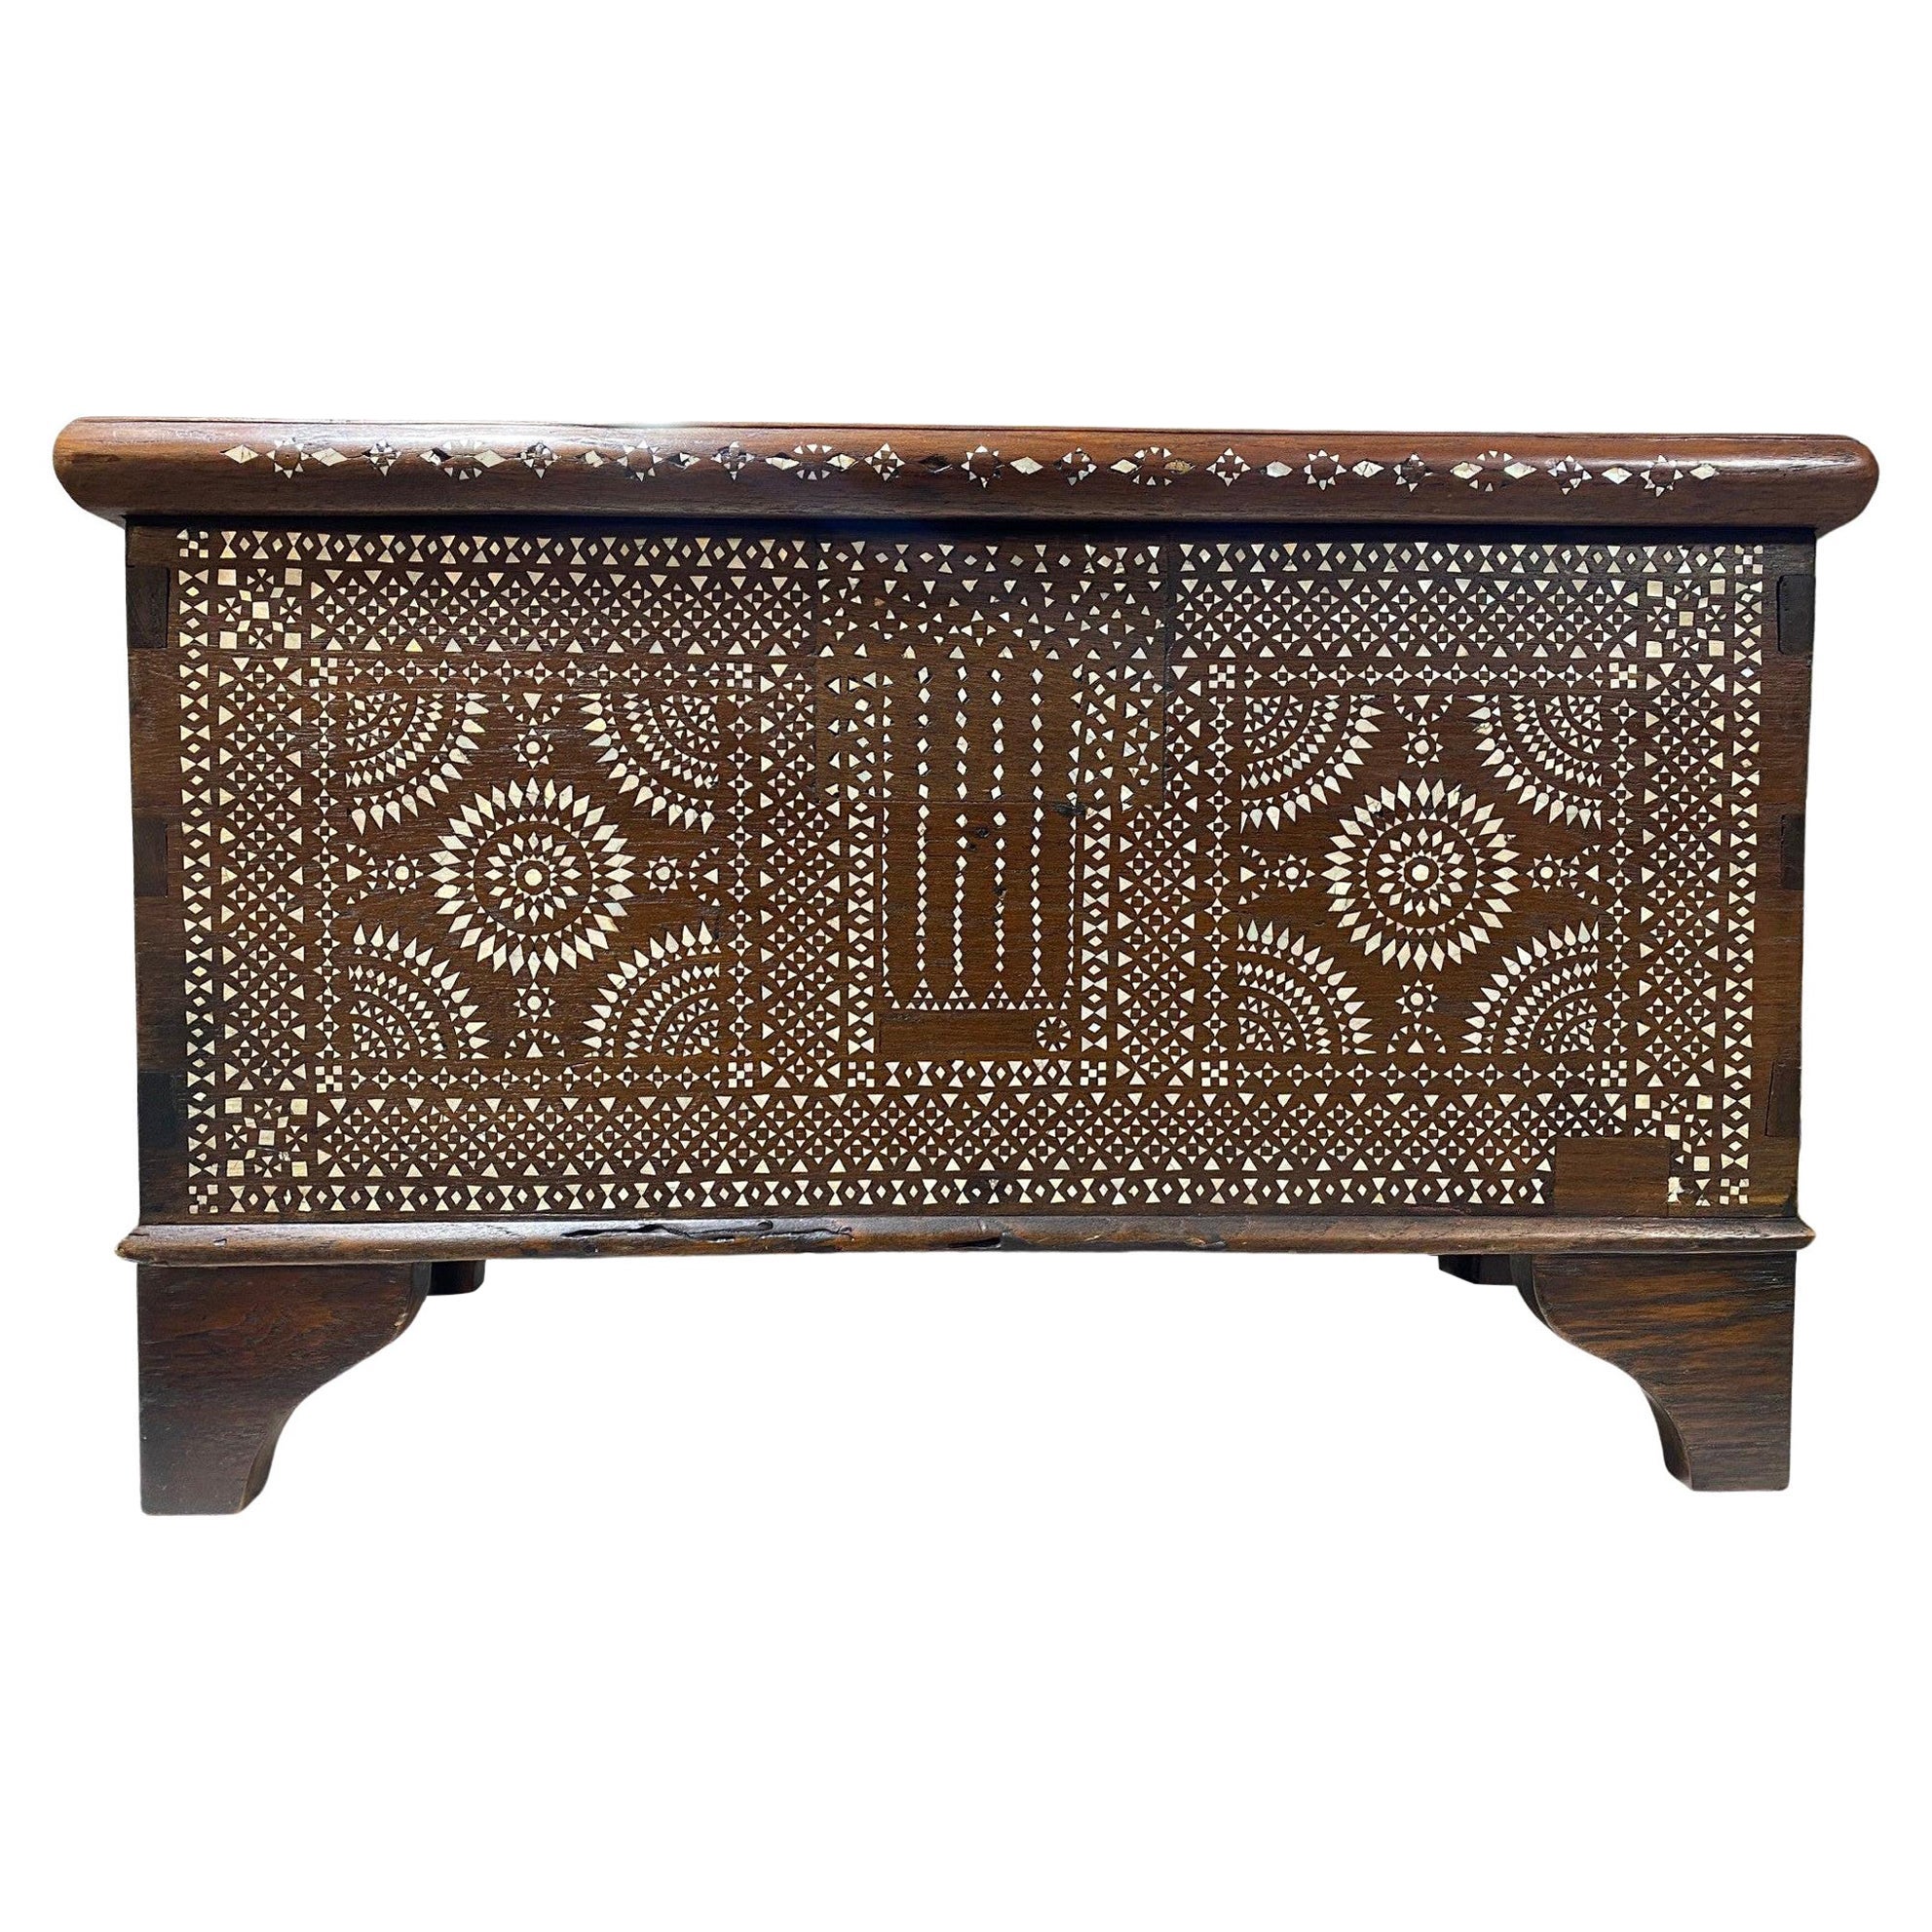 Beautiful Moorish Syrian or Asian Inlaid Inlay Wood Box Storage Chest Trunk For Sale